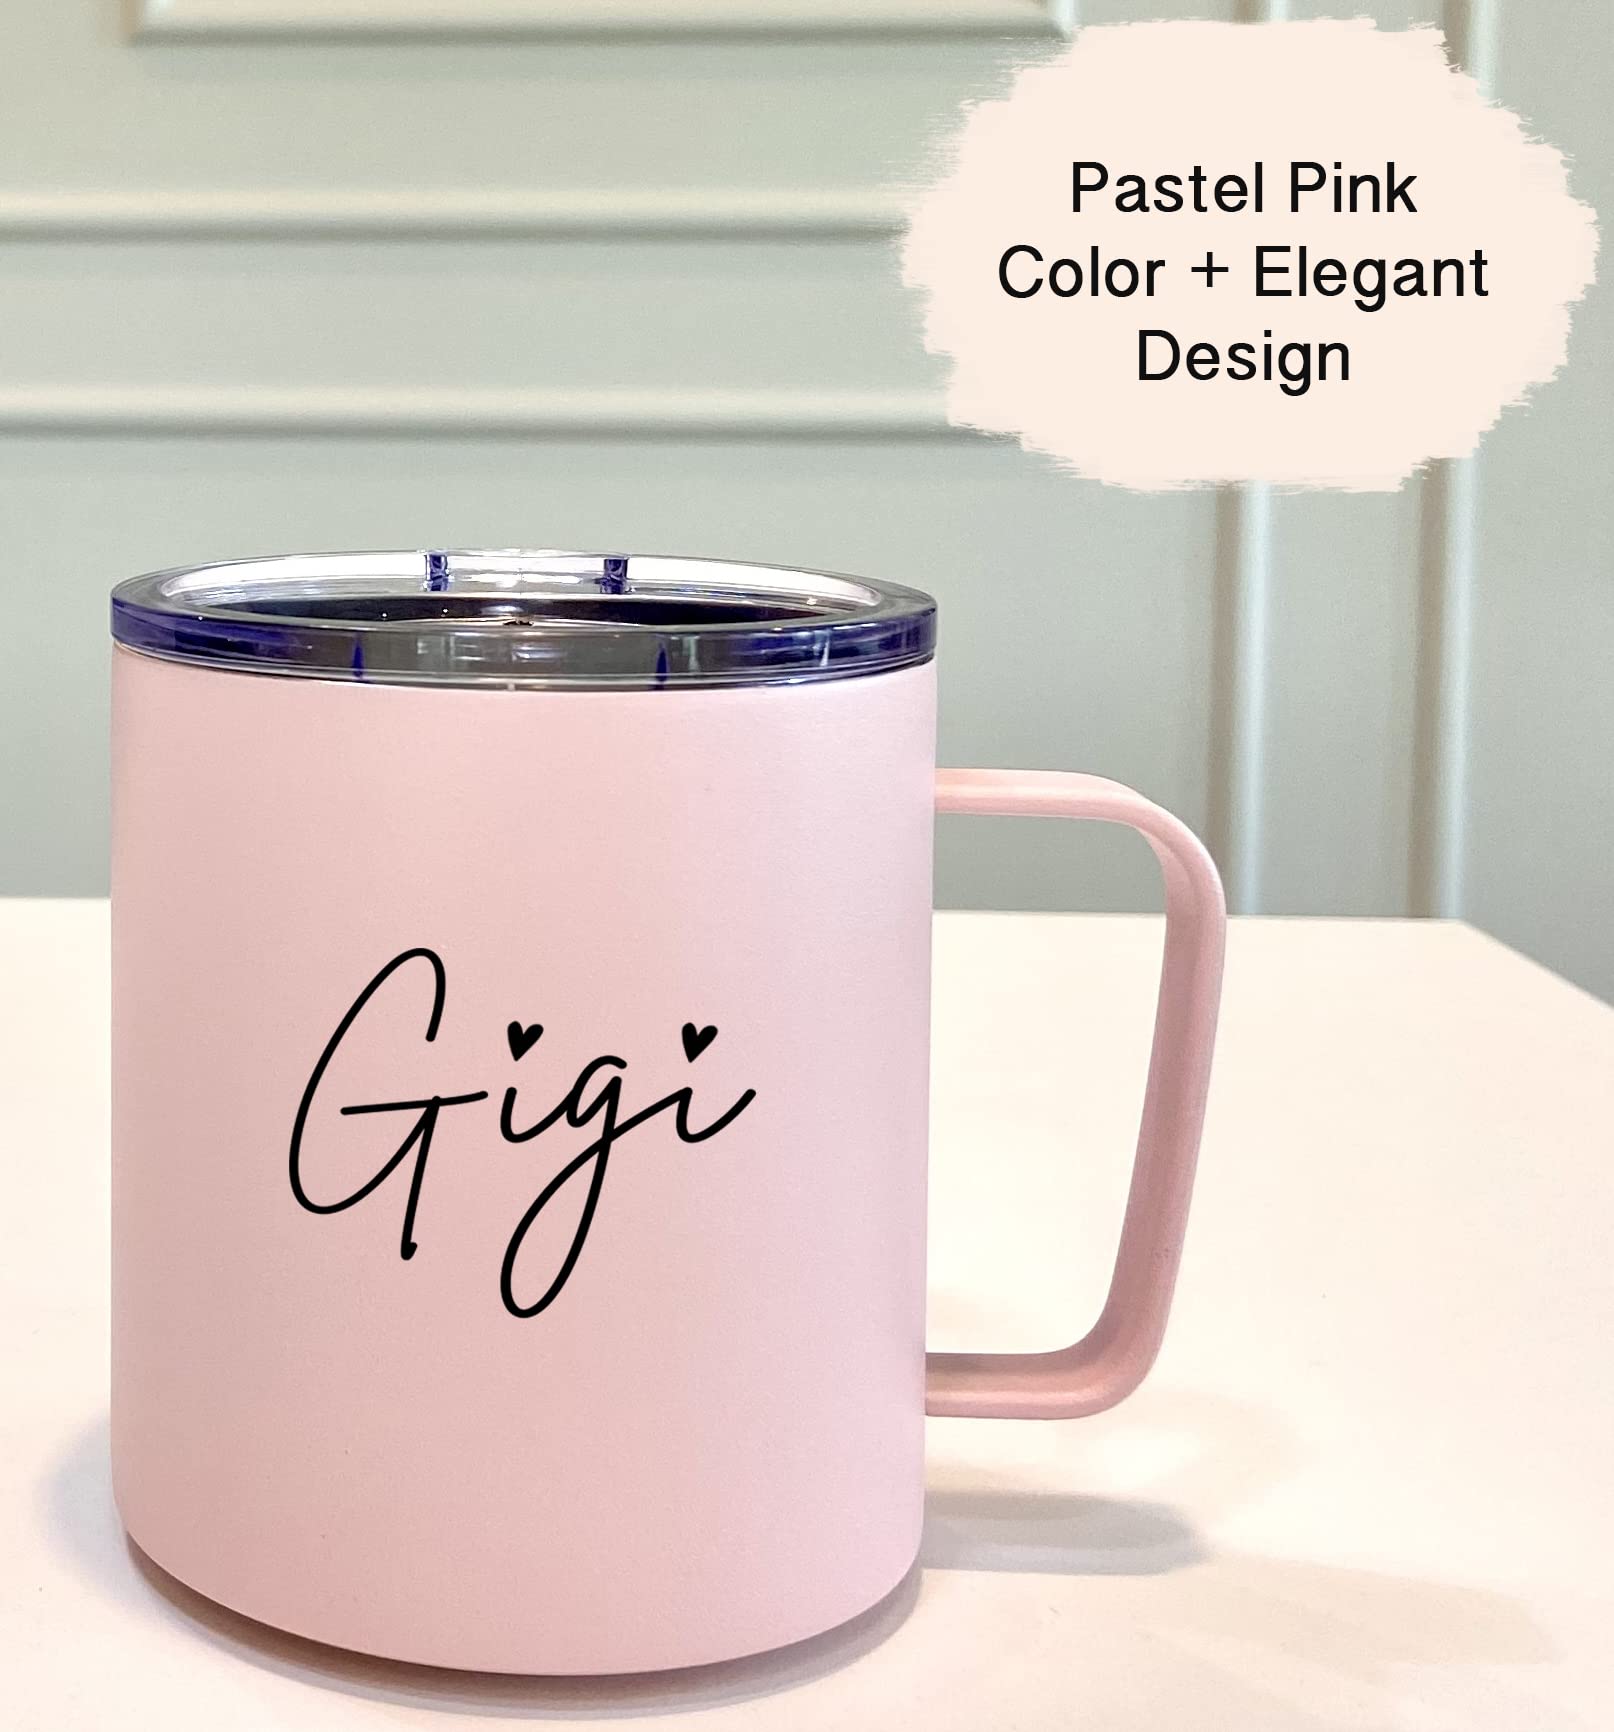 VIOLET & GALE Gigi Gifts for Grandma 12oz Lovely Gigi Coffee Mug for GG from Grandkids Gigi to Be Travel Tumbler Cup